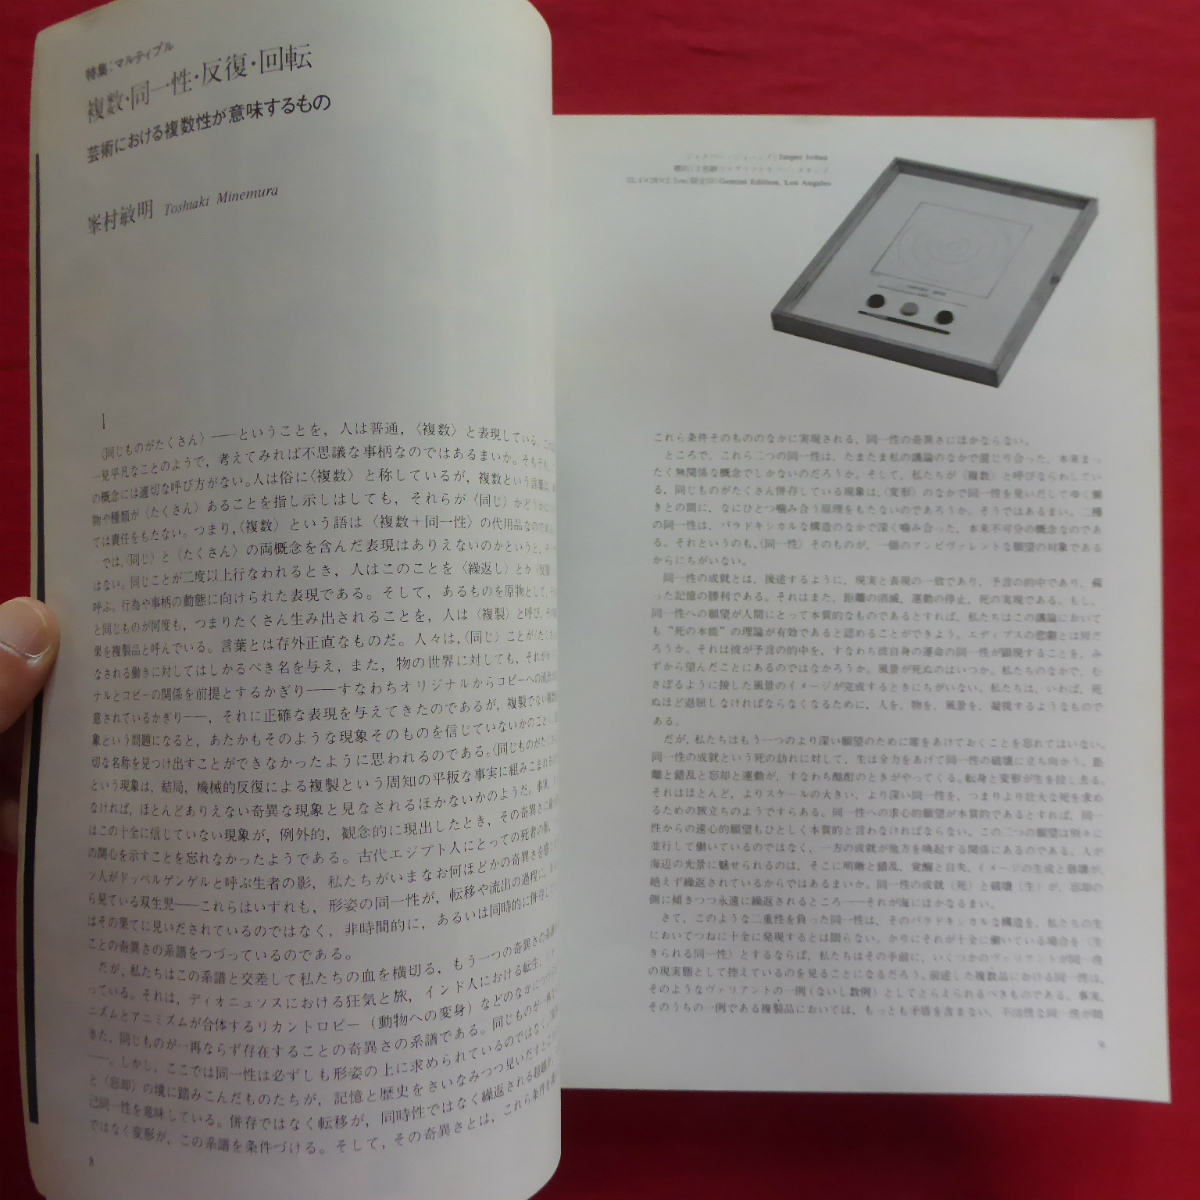 b13/ magazine [gq][ special collection : maru tip Roo art regarding several ./jiikyuu publish company *1973 year ]... Akira / Wakabayashi ./ Shibusawa Tatsuhiko / Ikeda Masuo 